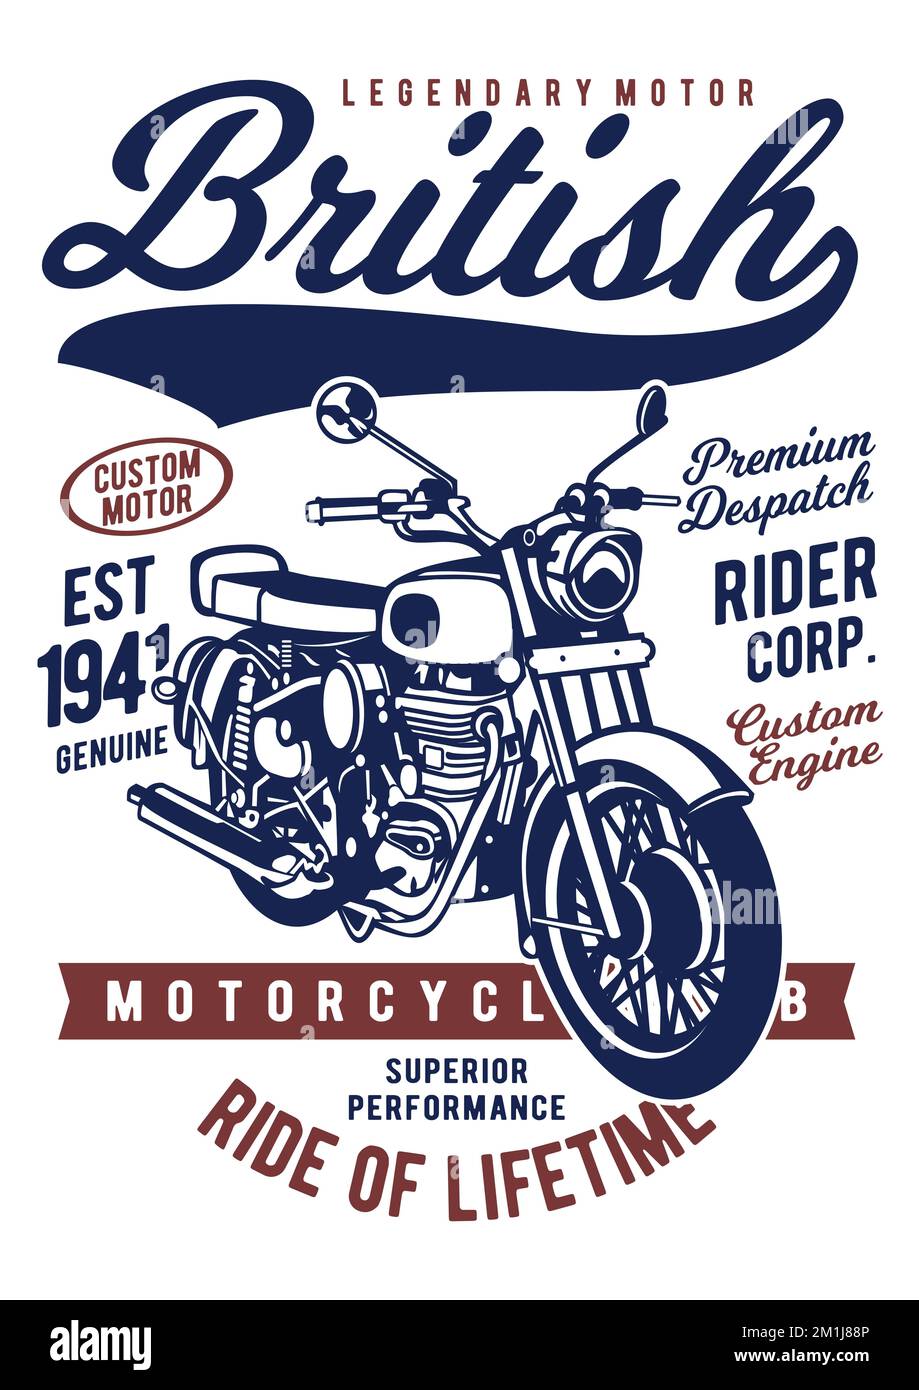 Rare British motorcycle poster Stock Photo